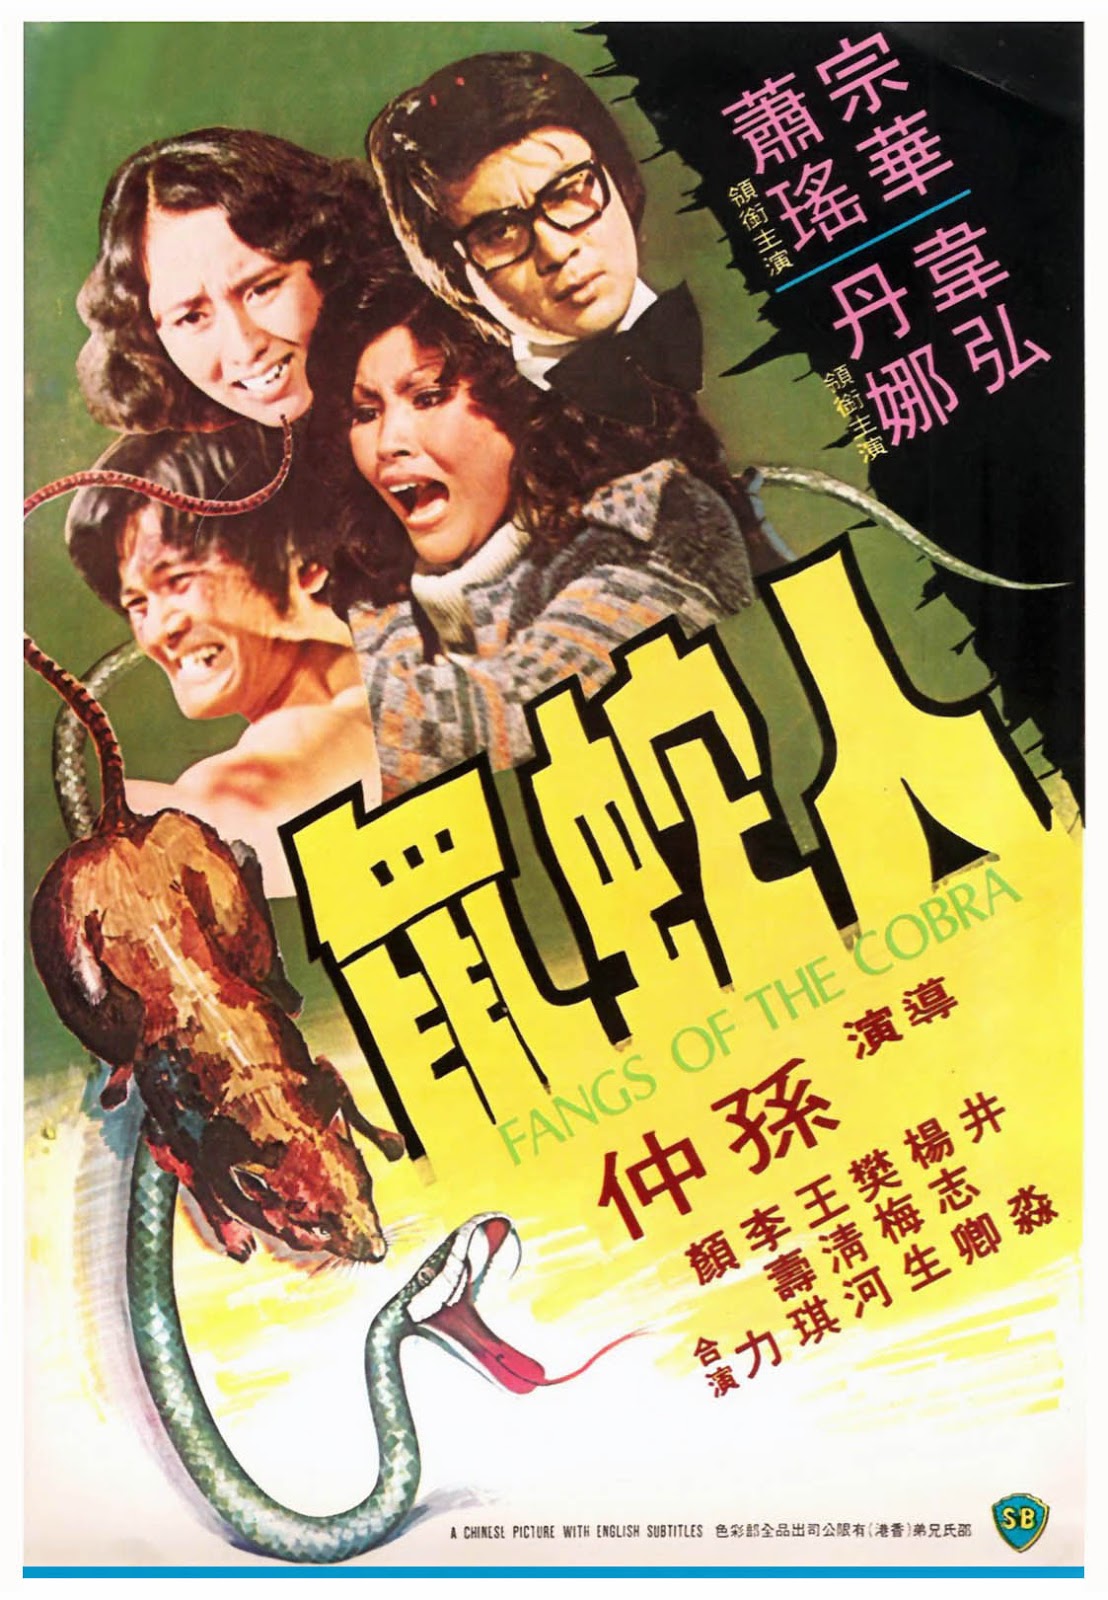 Fangs Of The Cobra(1977)